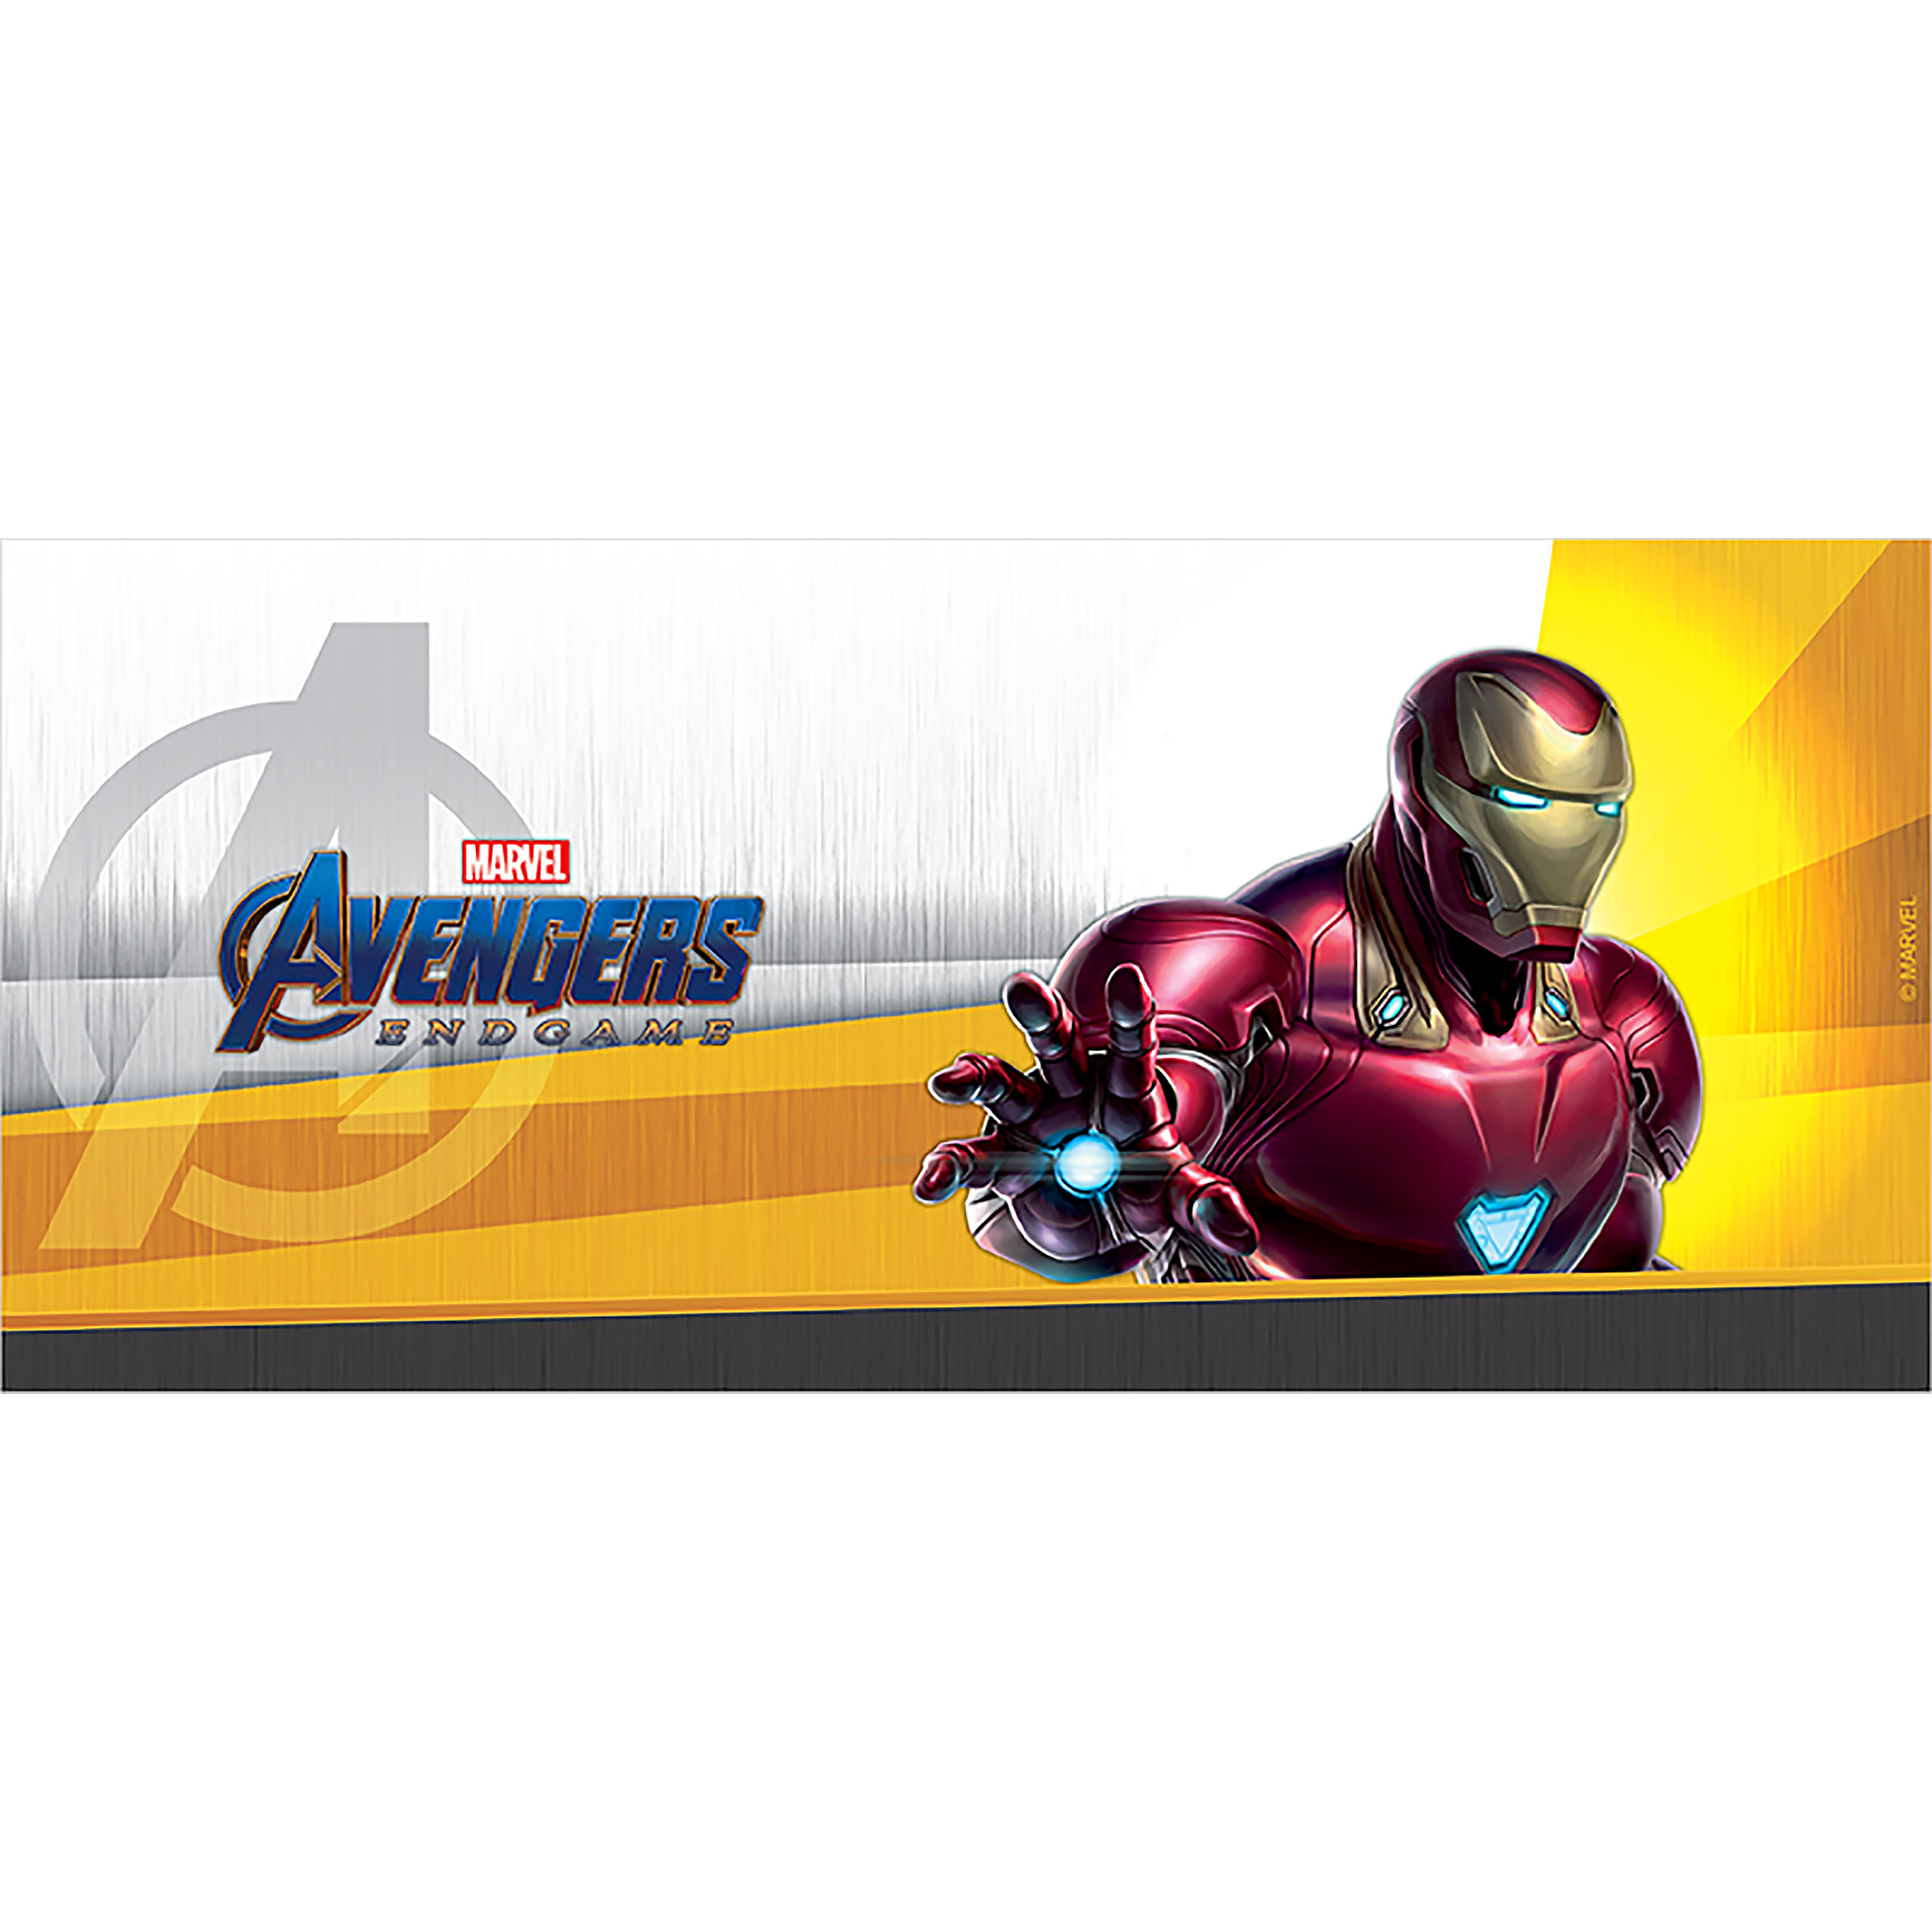 Avengers - Iron Man Endgame Mug